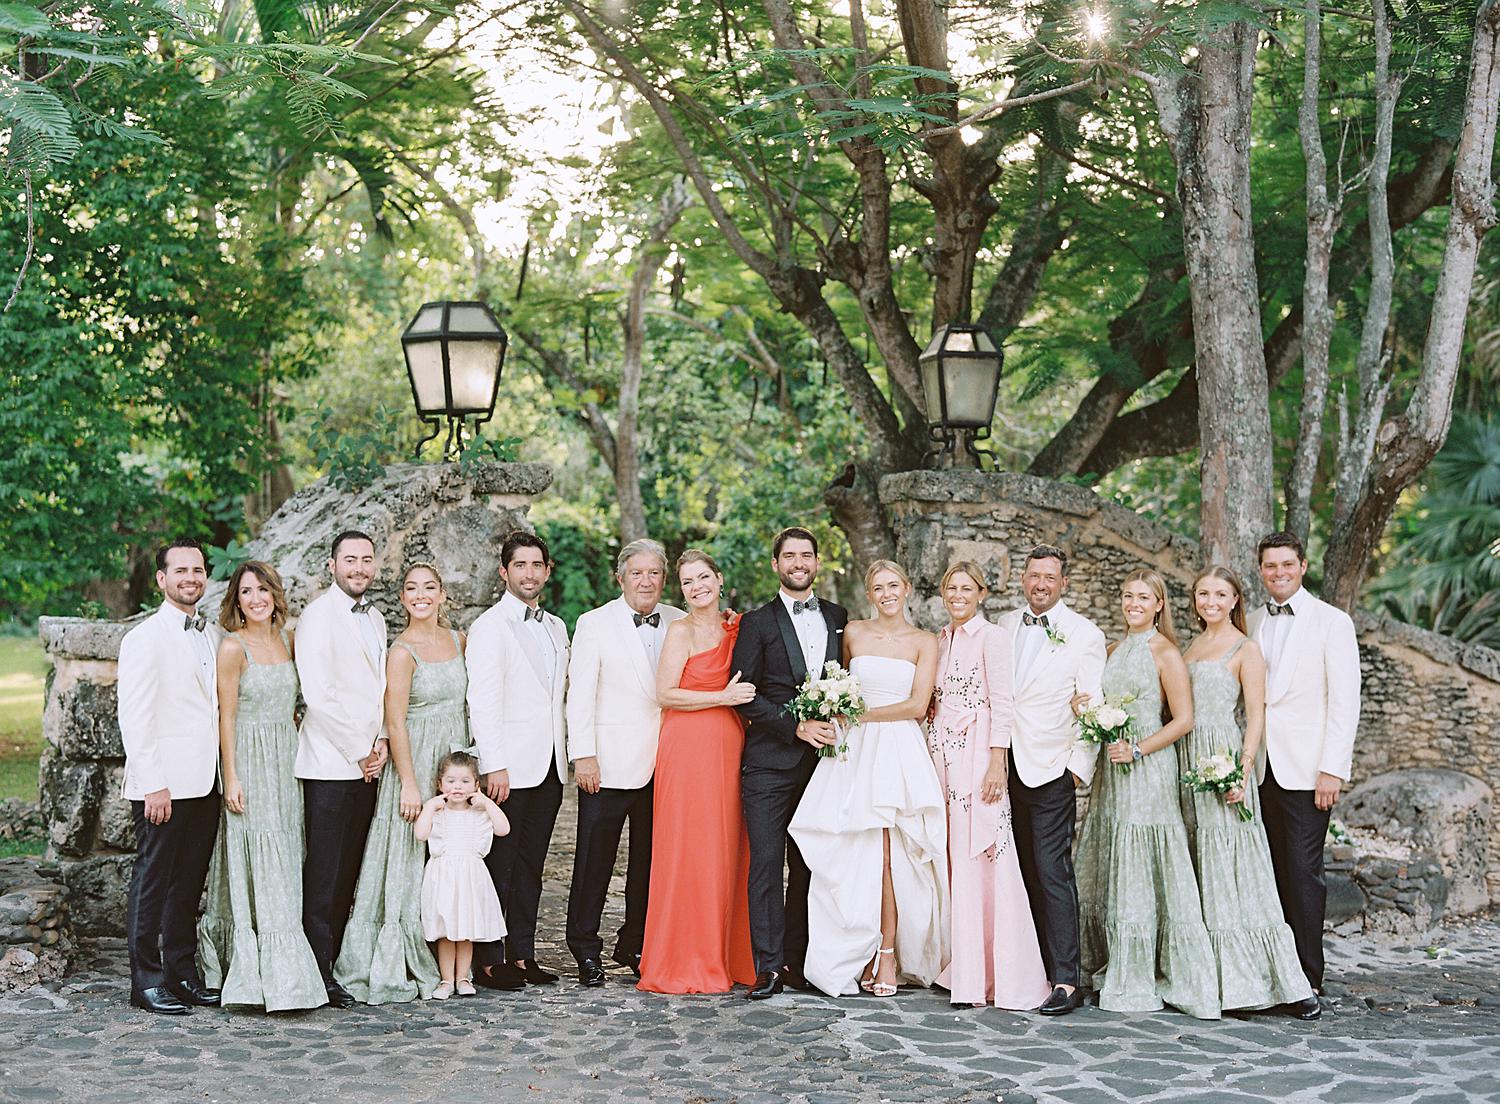 Bride and groom with family for portrait at Altos de Chavón wedding.